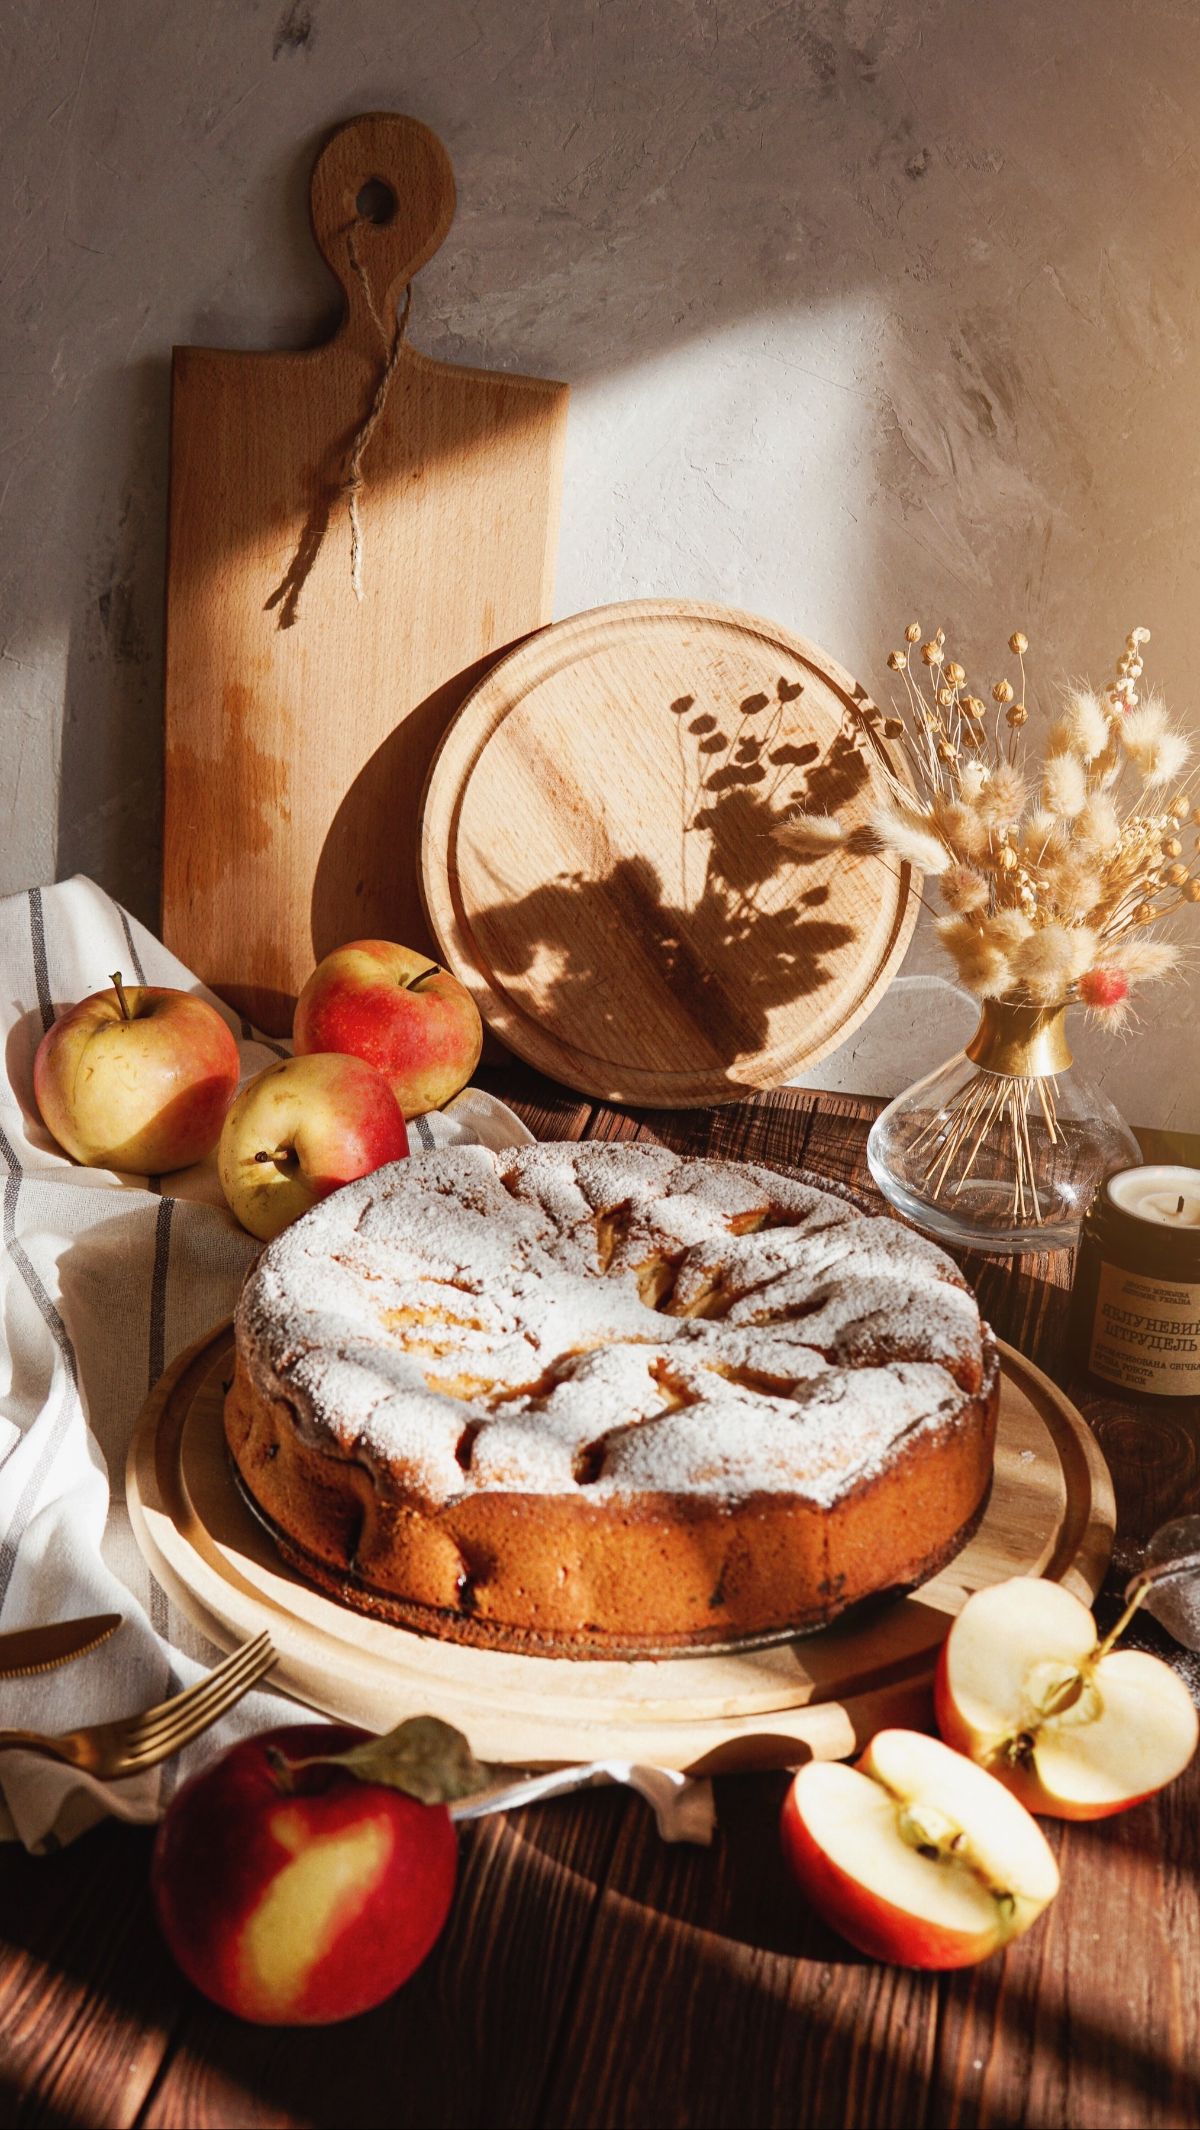 Jablecznik – Polish apple cake | taste of colours